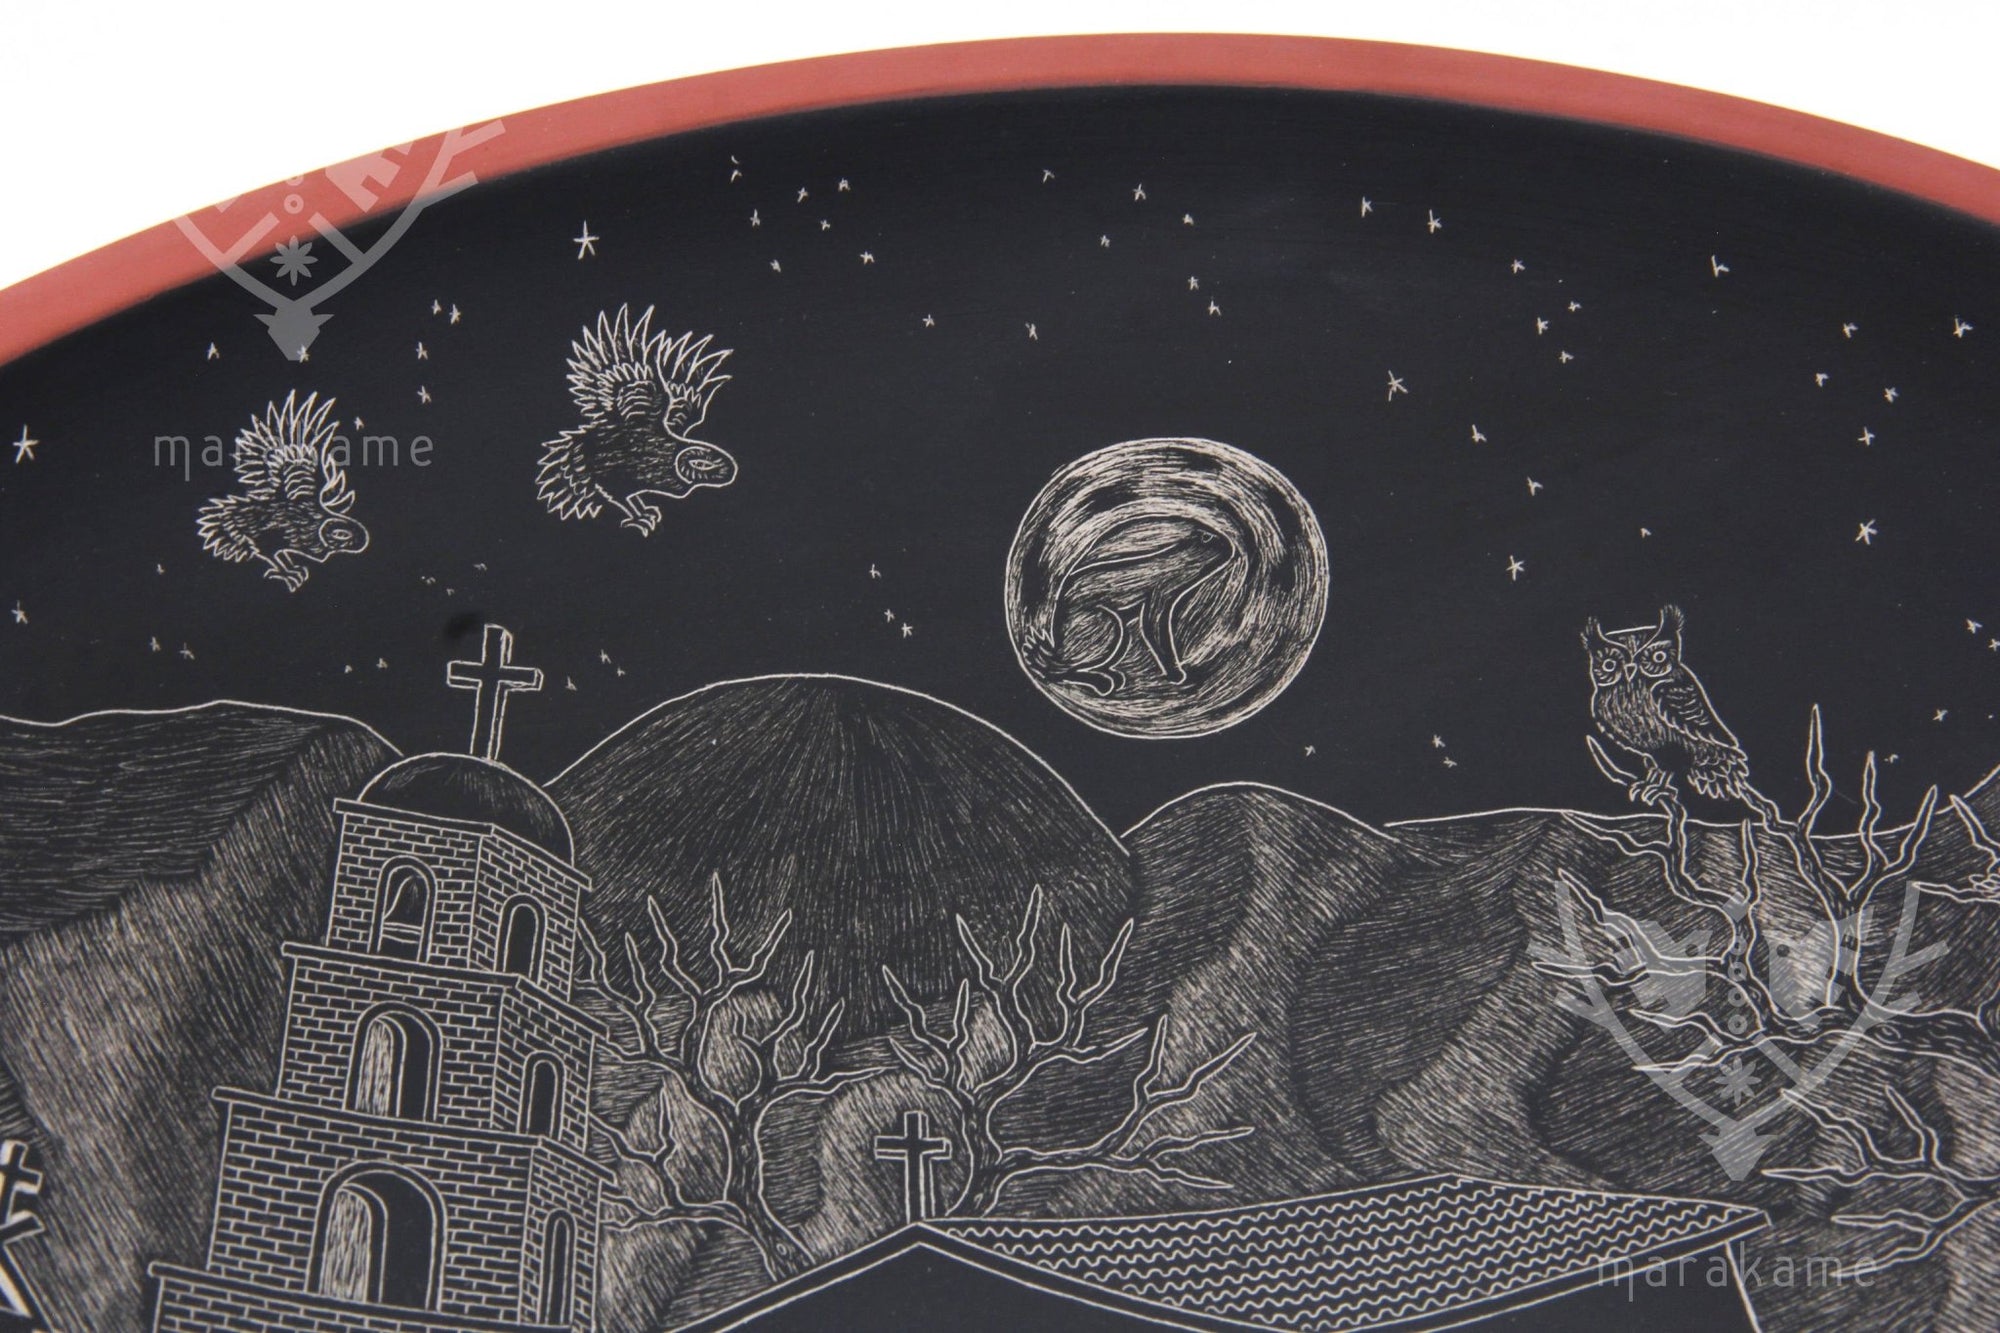 Mata Ortiz Ceramic - Day of the Dead Plate Rabbit in the Moon at Night - Huichol Art - マラカメ